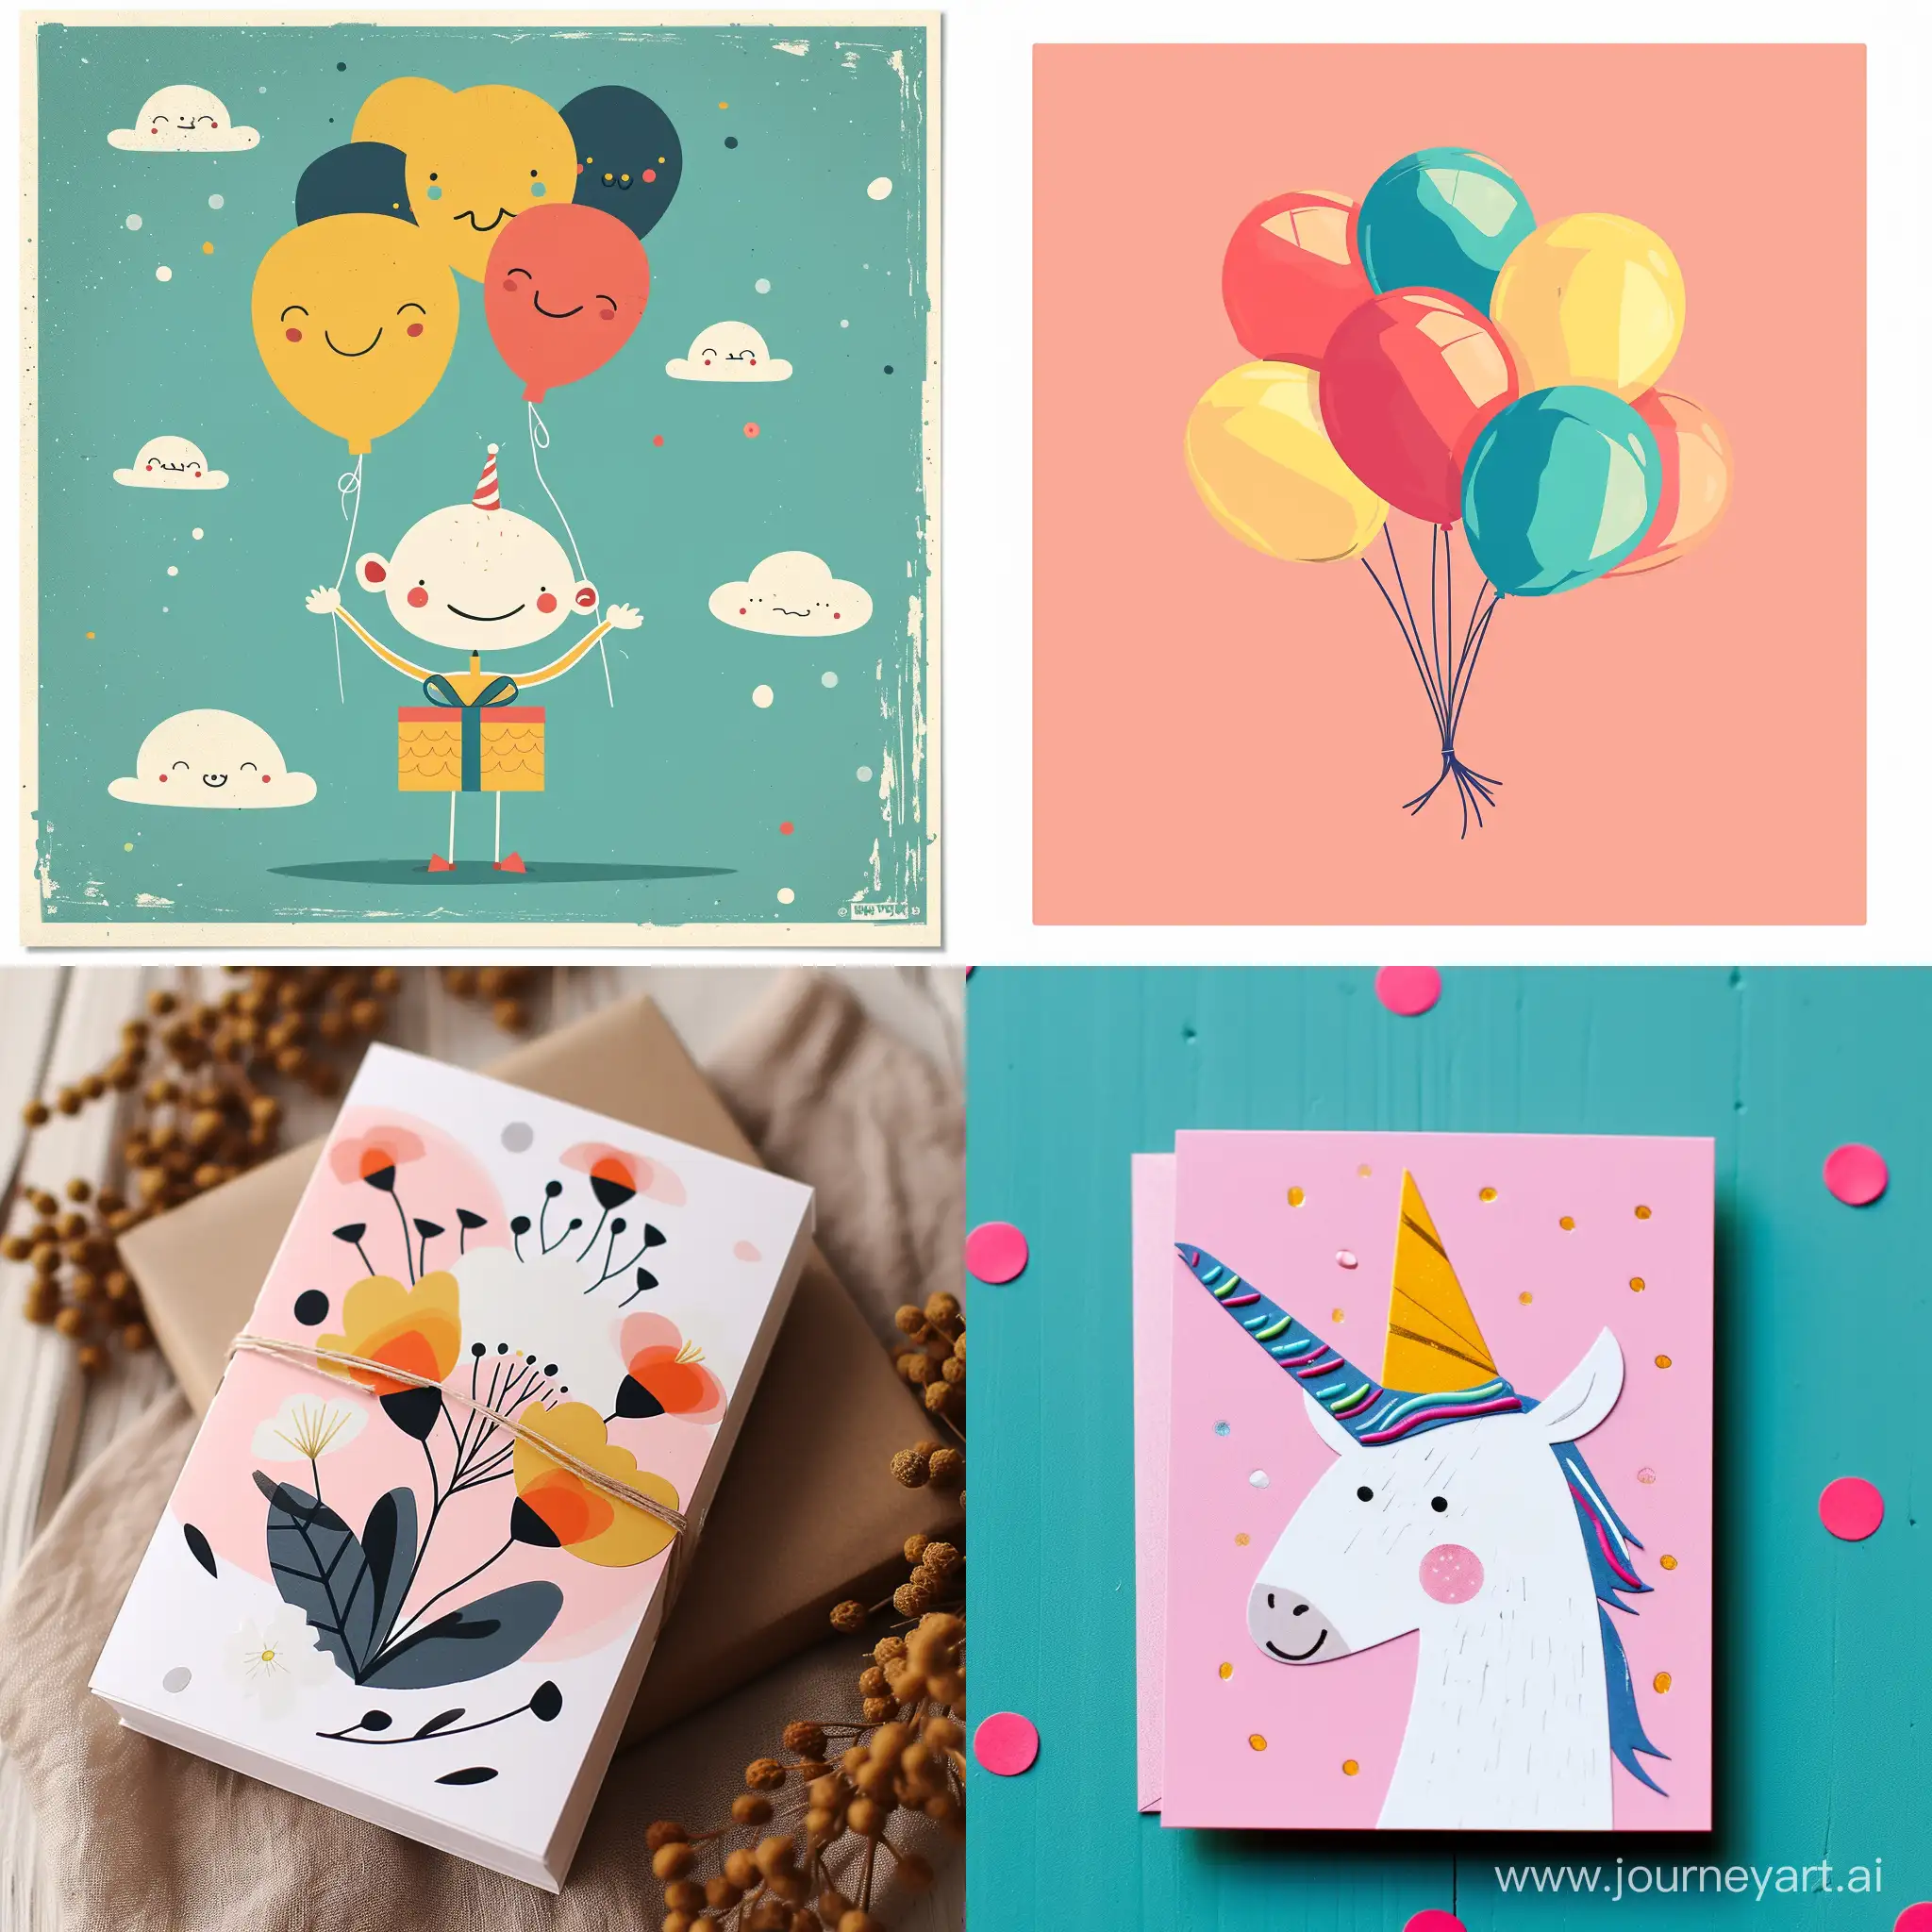 Punny Card Designs for Birthday, Invitation, etc